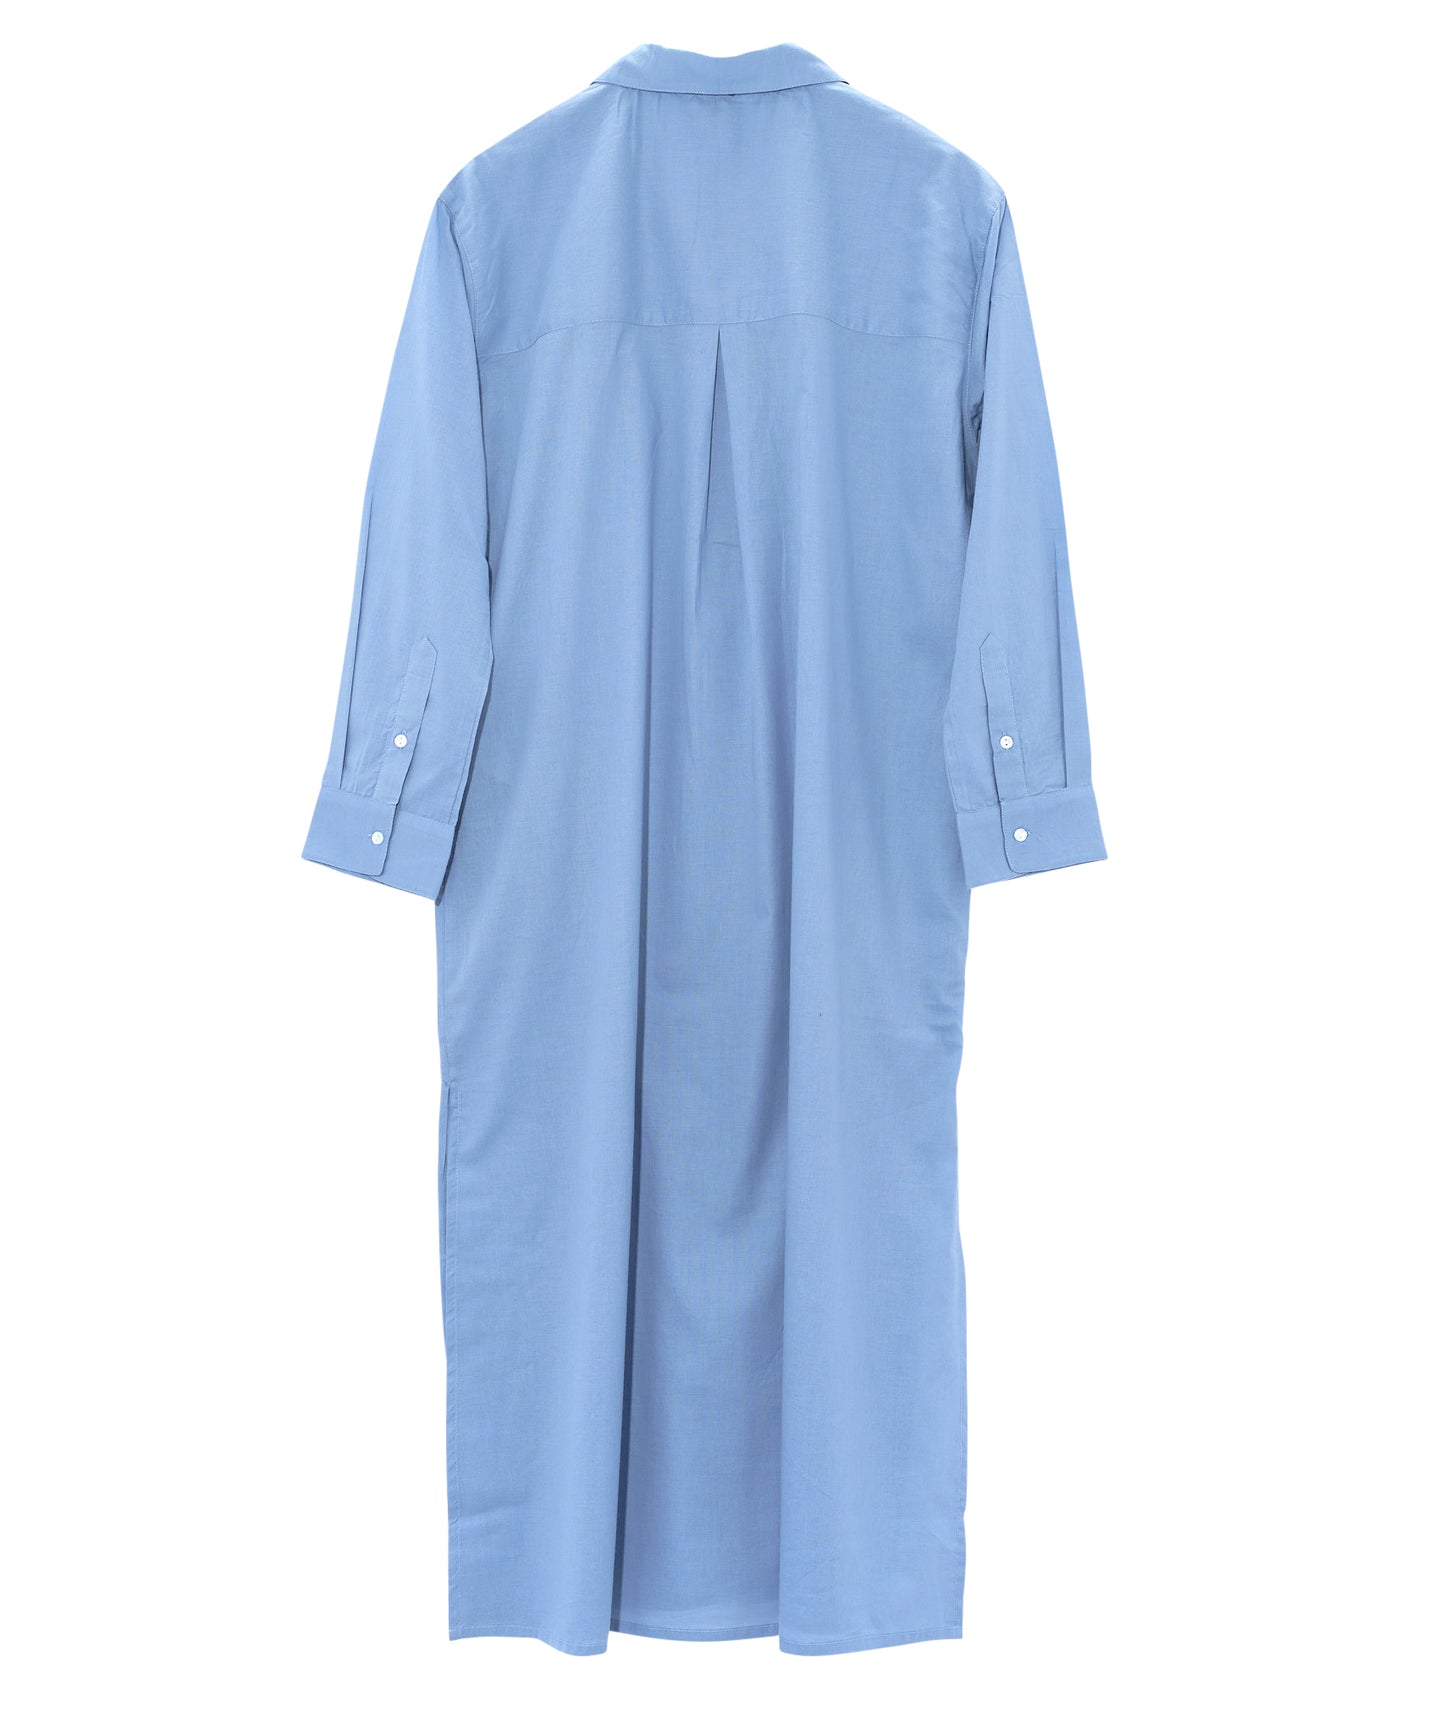 Solana Maxi Shirt Dress in capri - back of garment